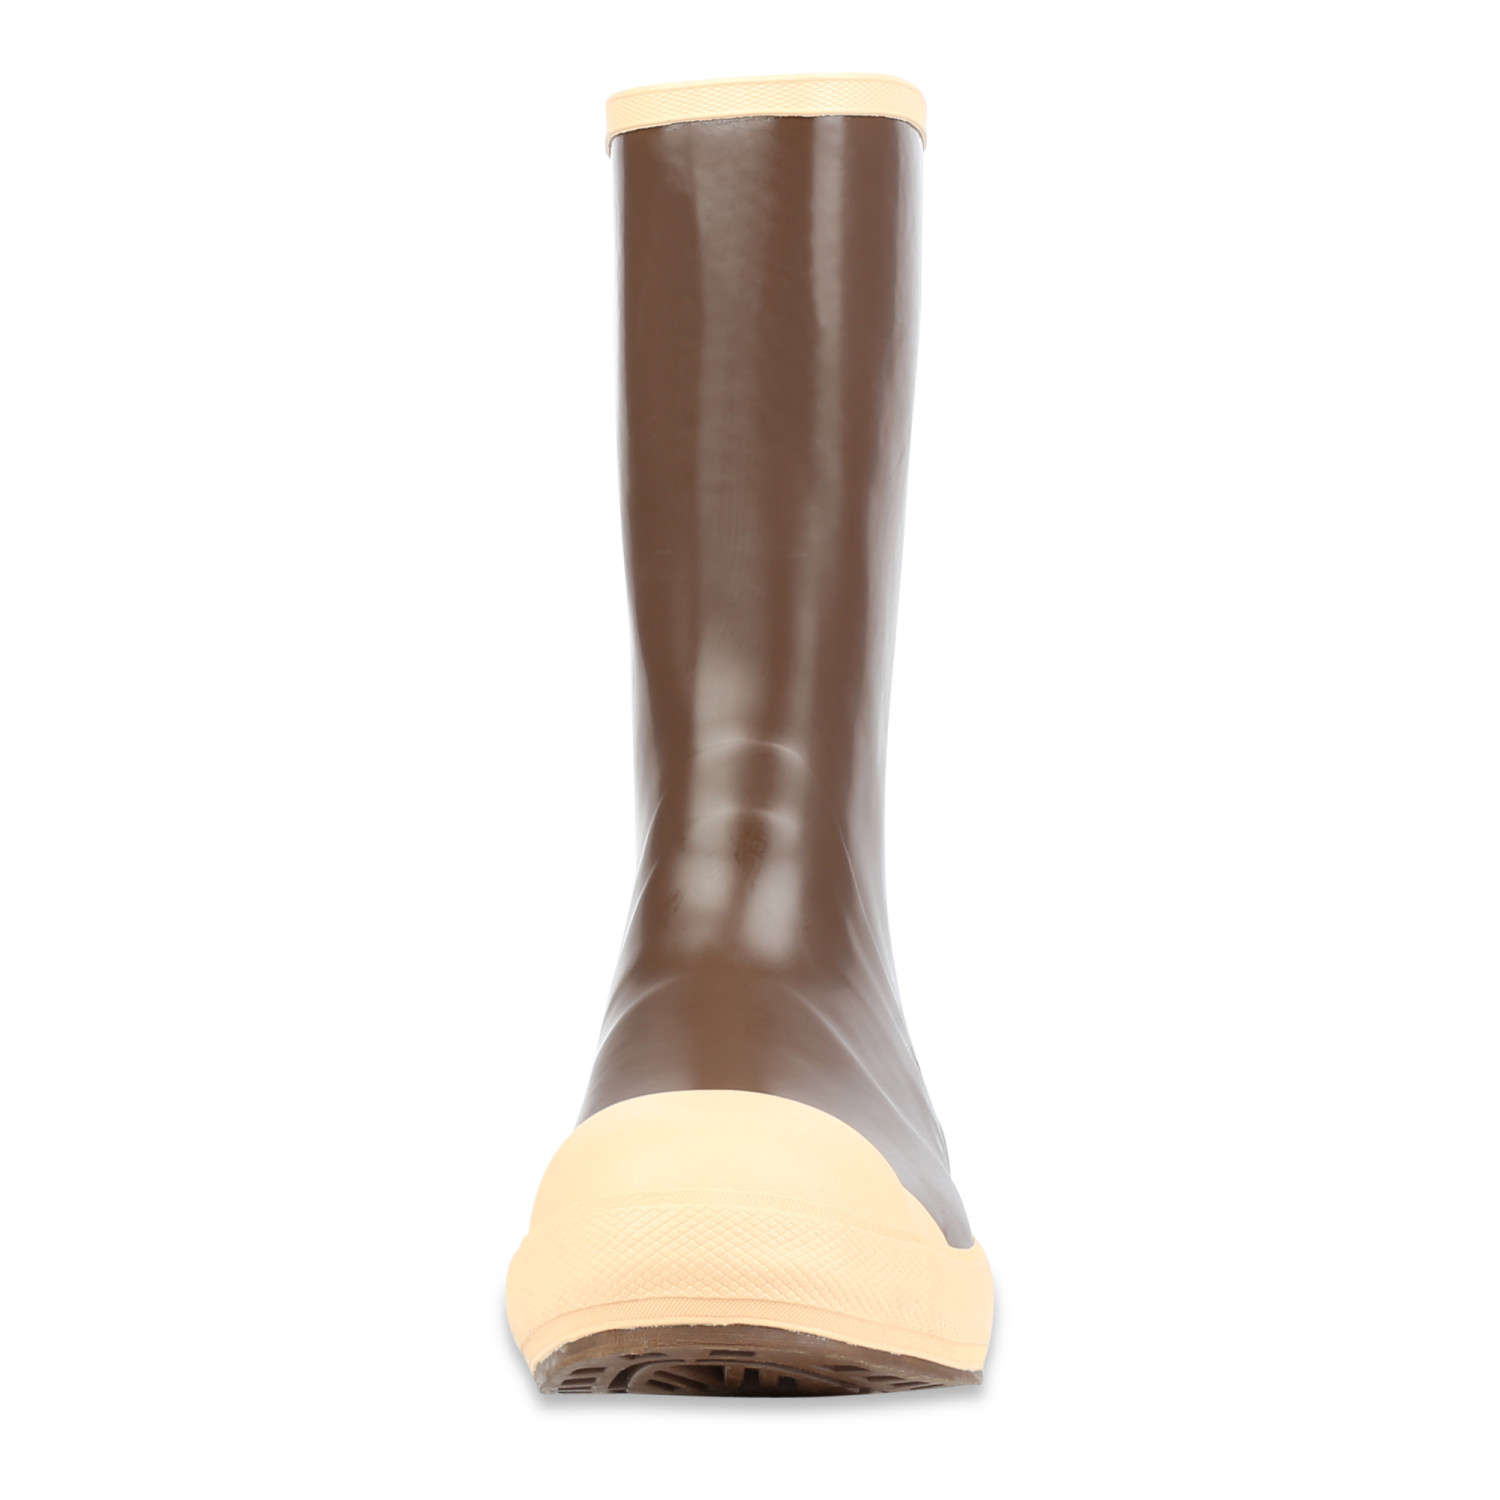 Servus 12 in Steel Toe Neoprene Safety Boot Size 11(M) - image 2 of 6